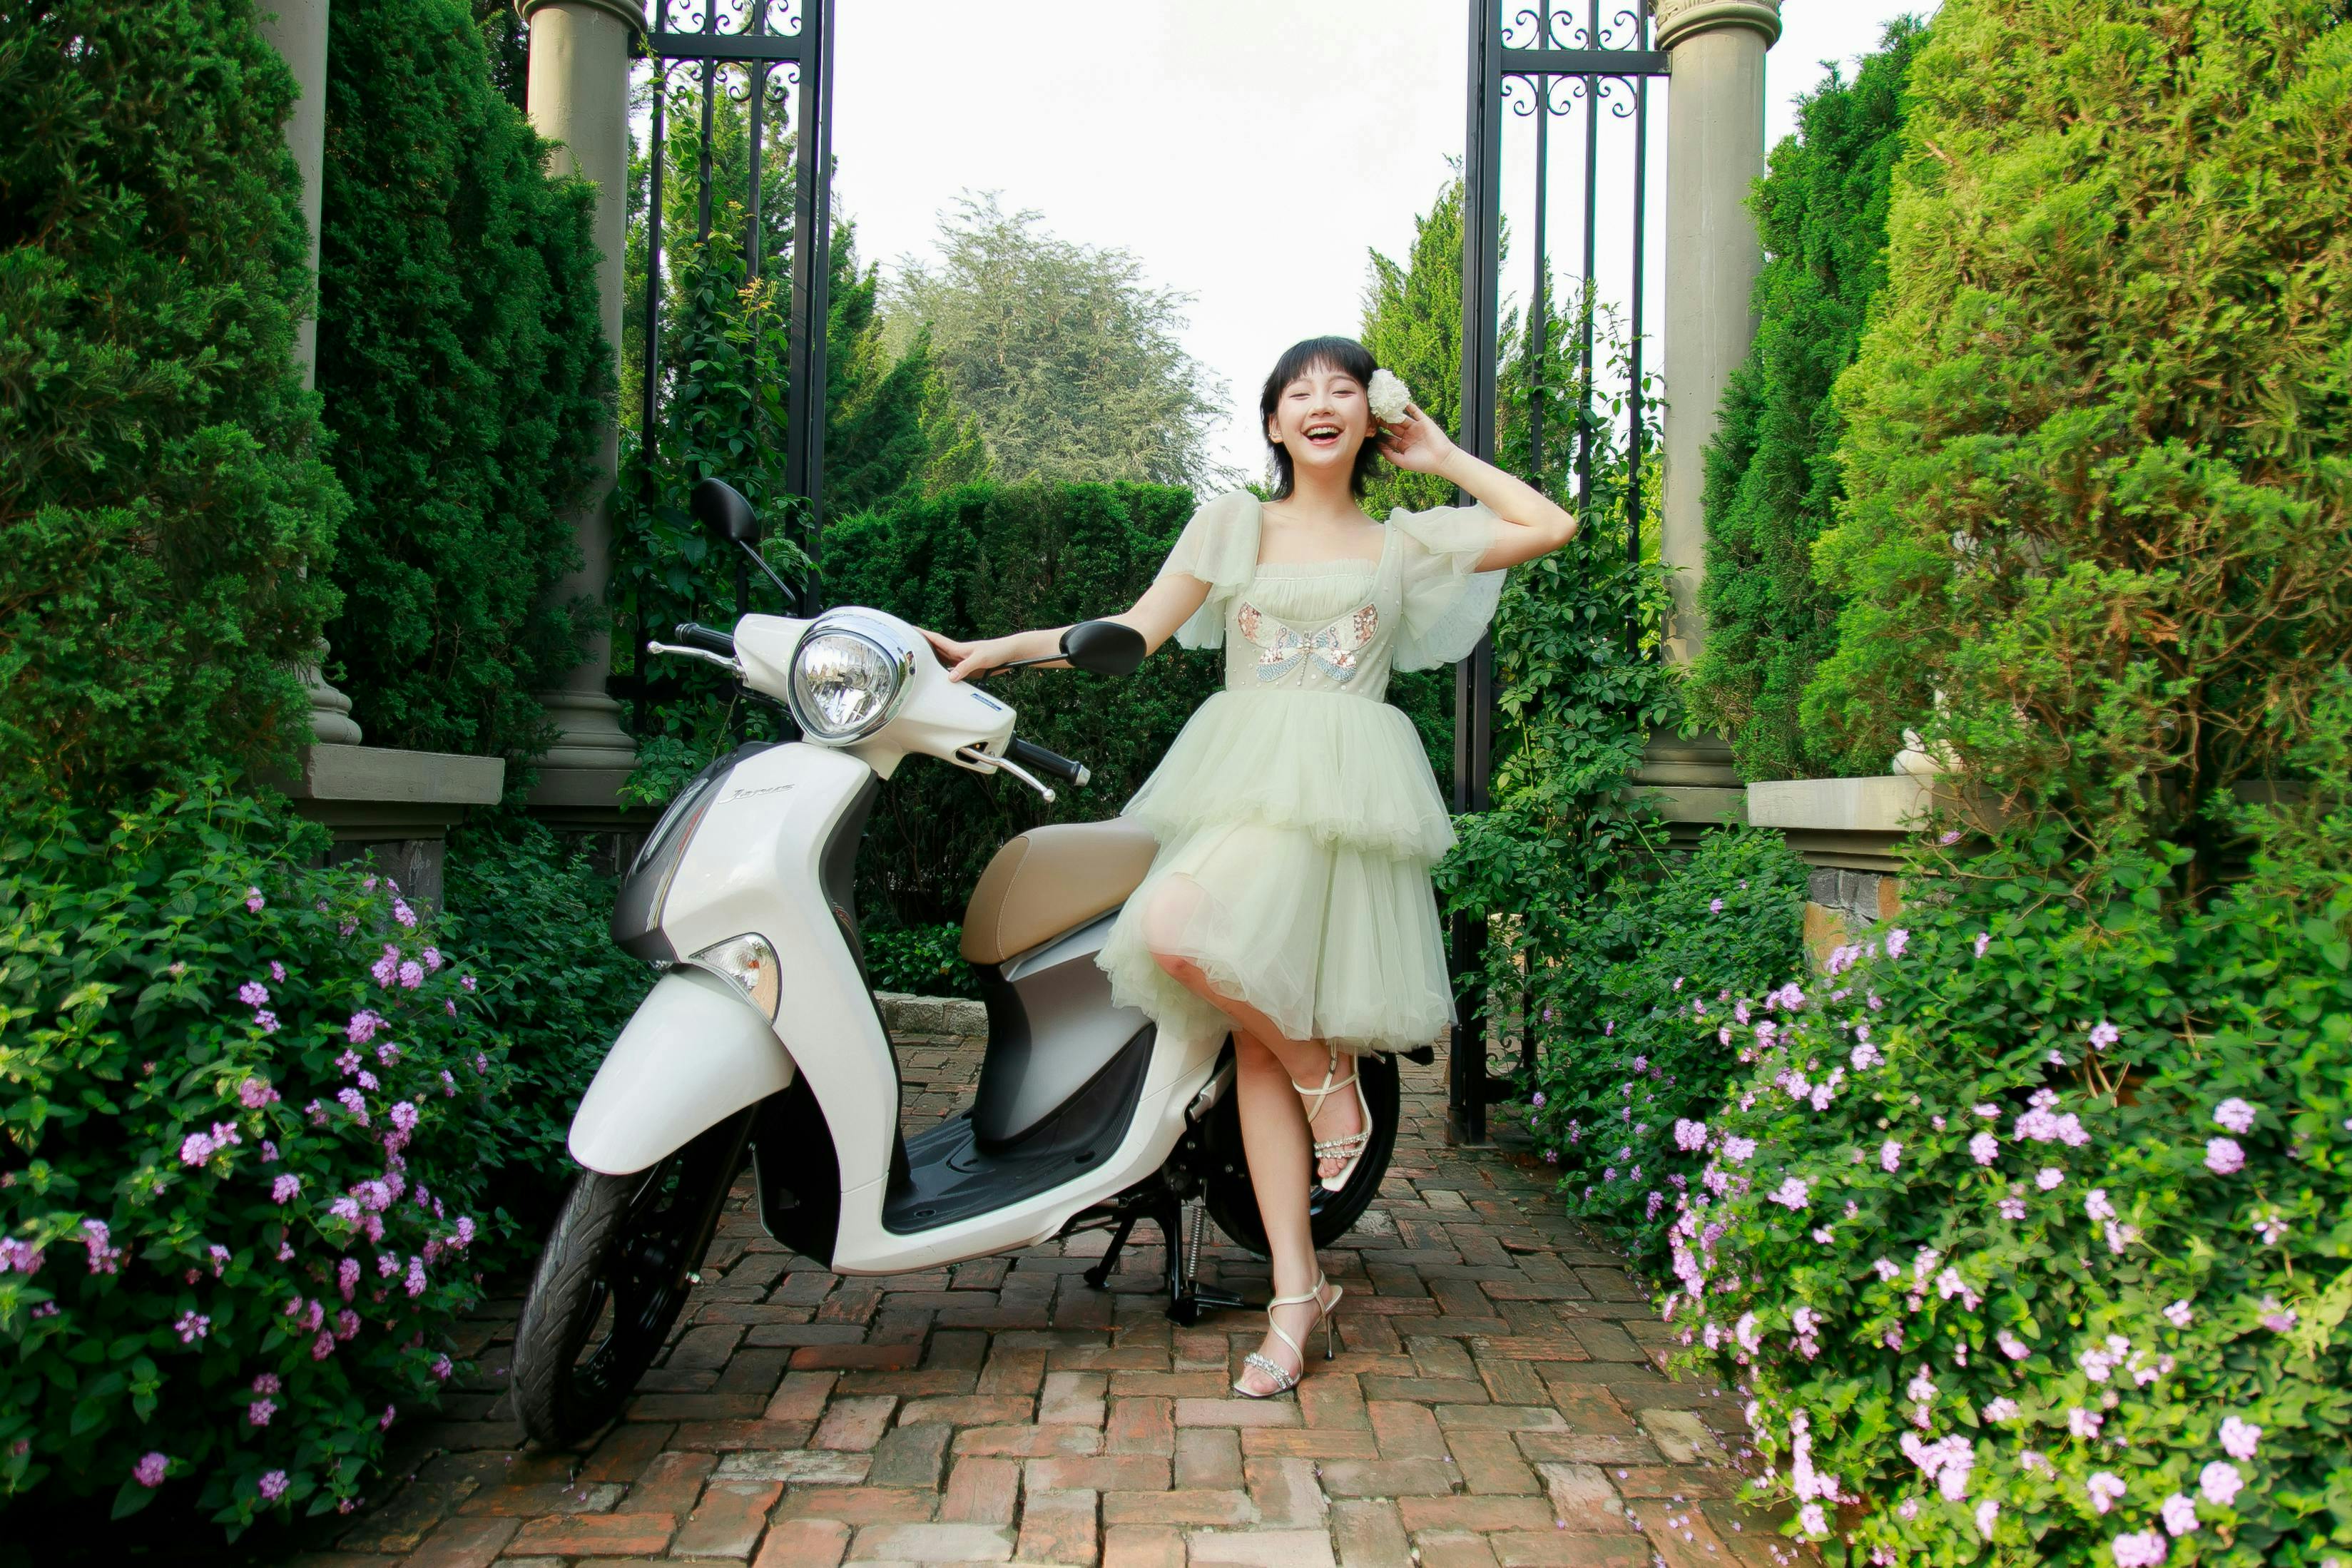 dress high heel walkway formal wear adult female person woman motorcycle motor scooter